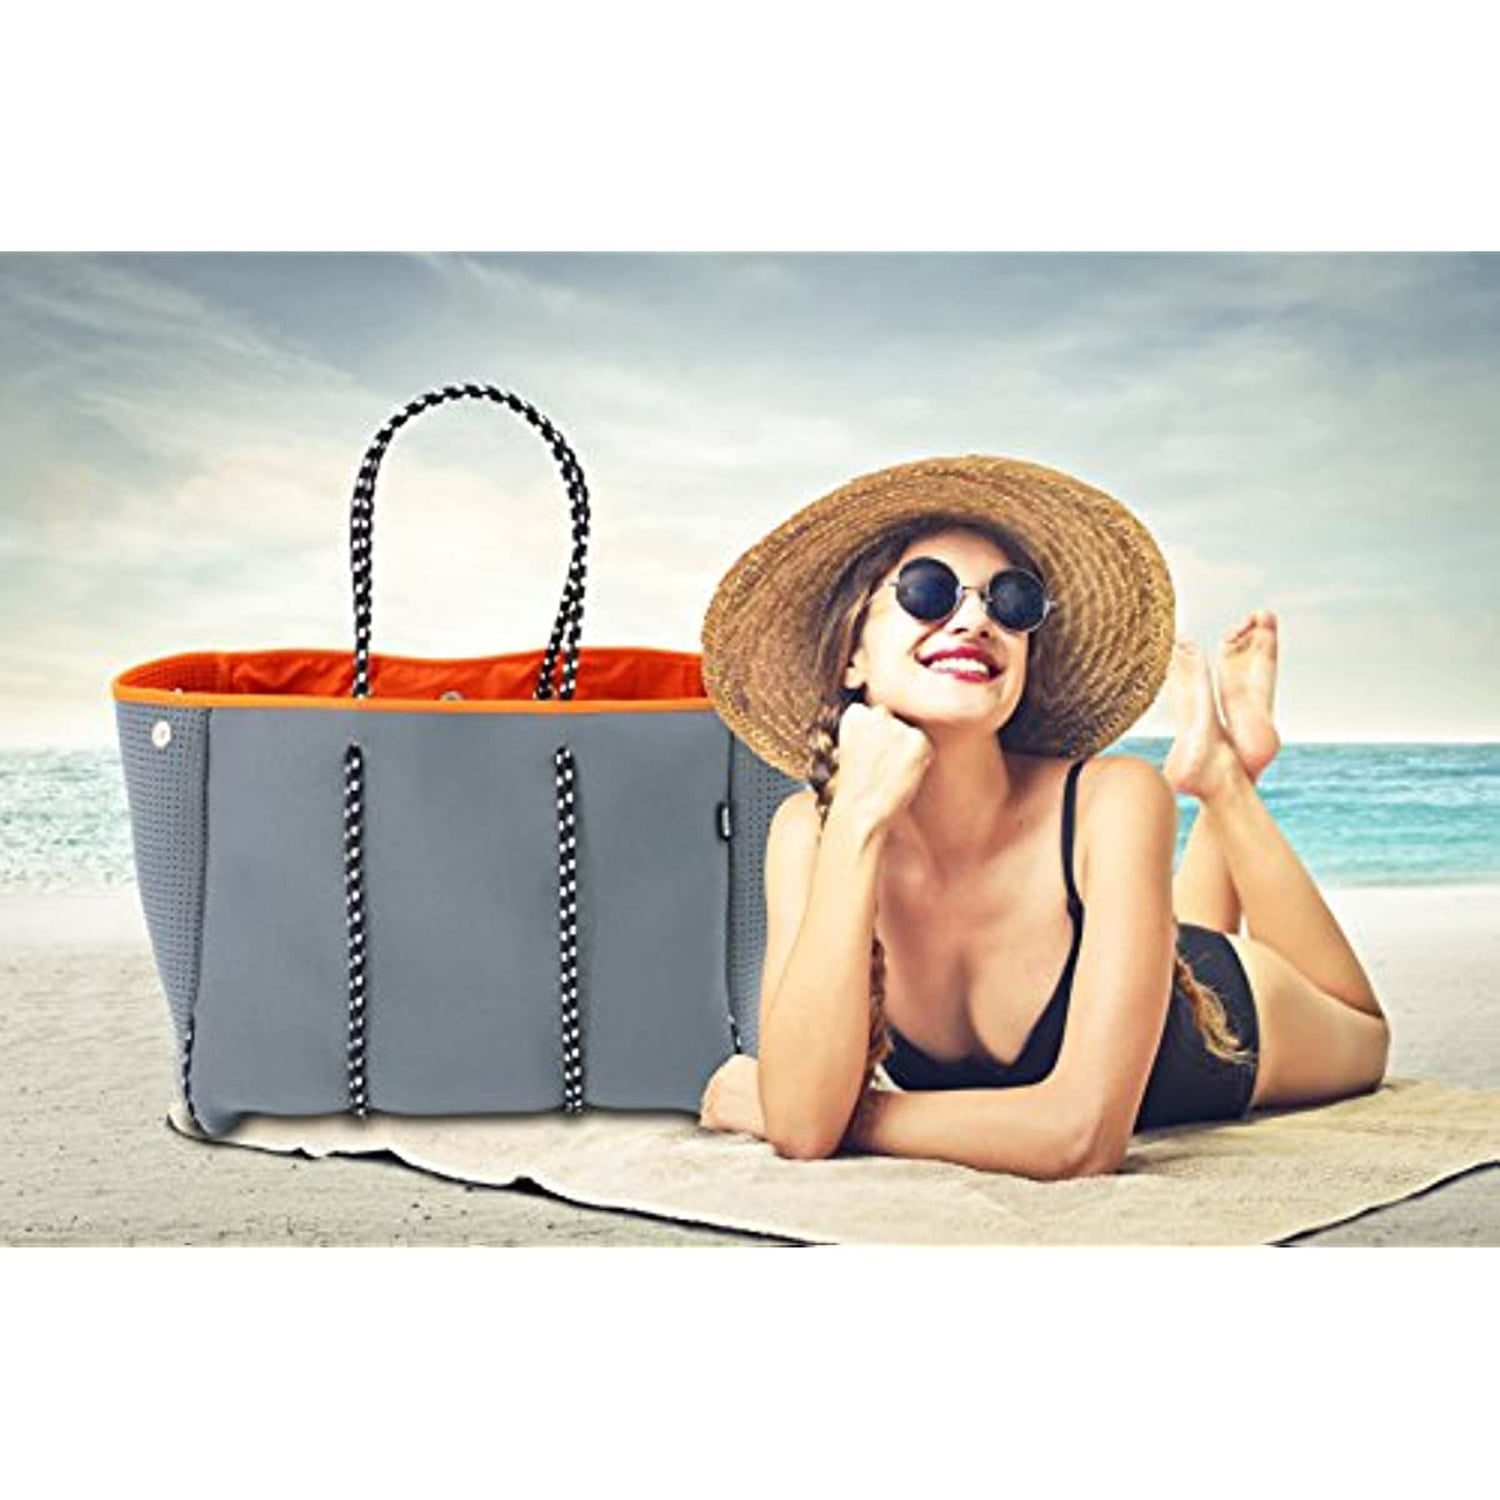 Multi Purpose Neoprene Beach Bag with Zippered Interior Pocket